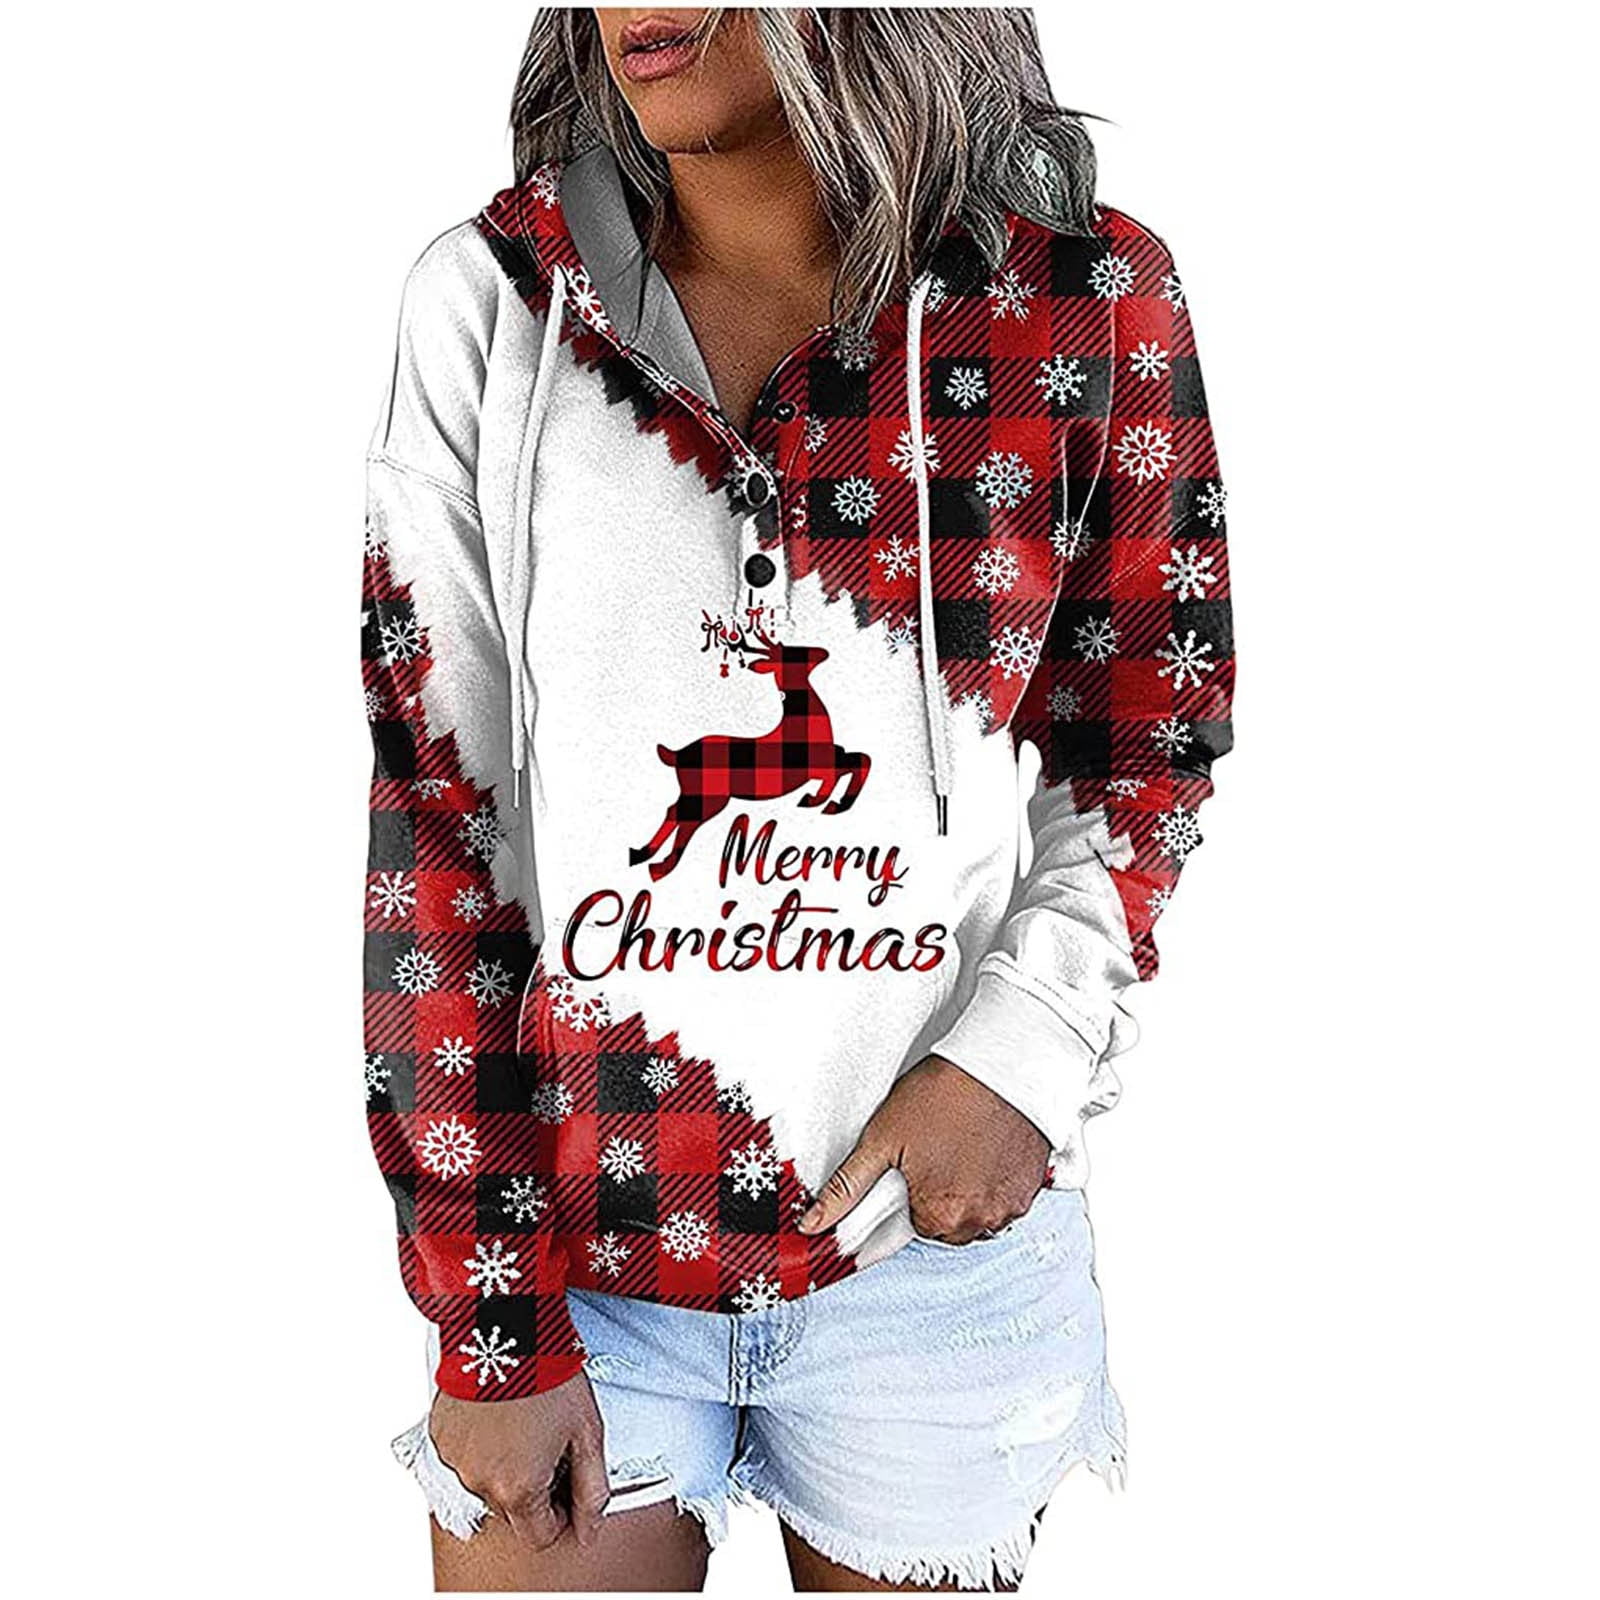 VREWARE trendy hoodies for women,1 dollar items only,chrismas